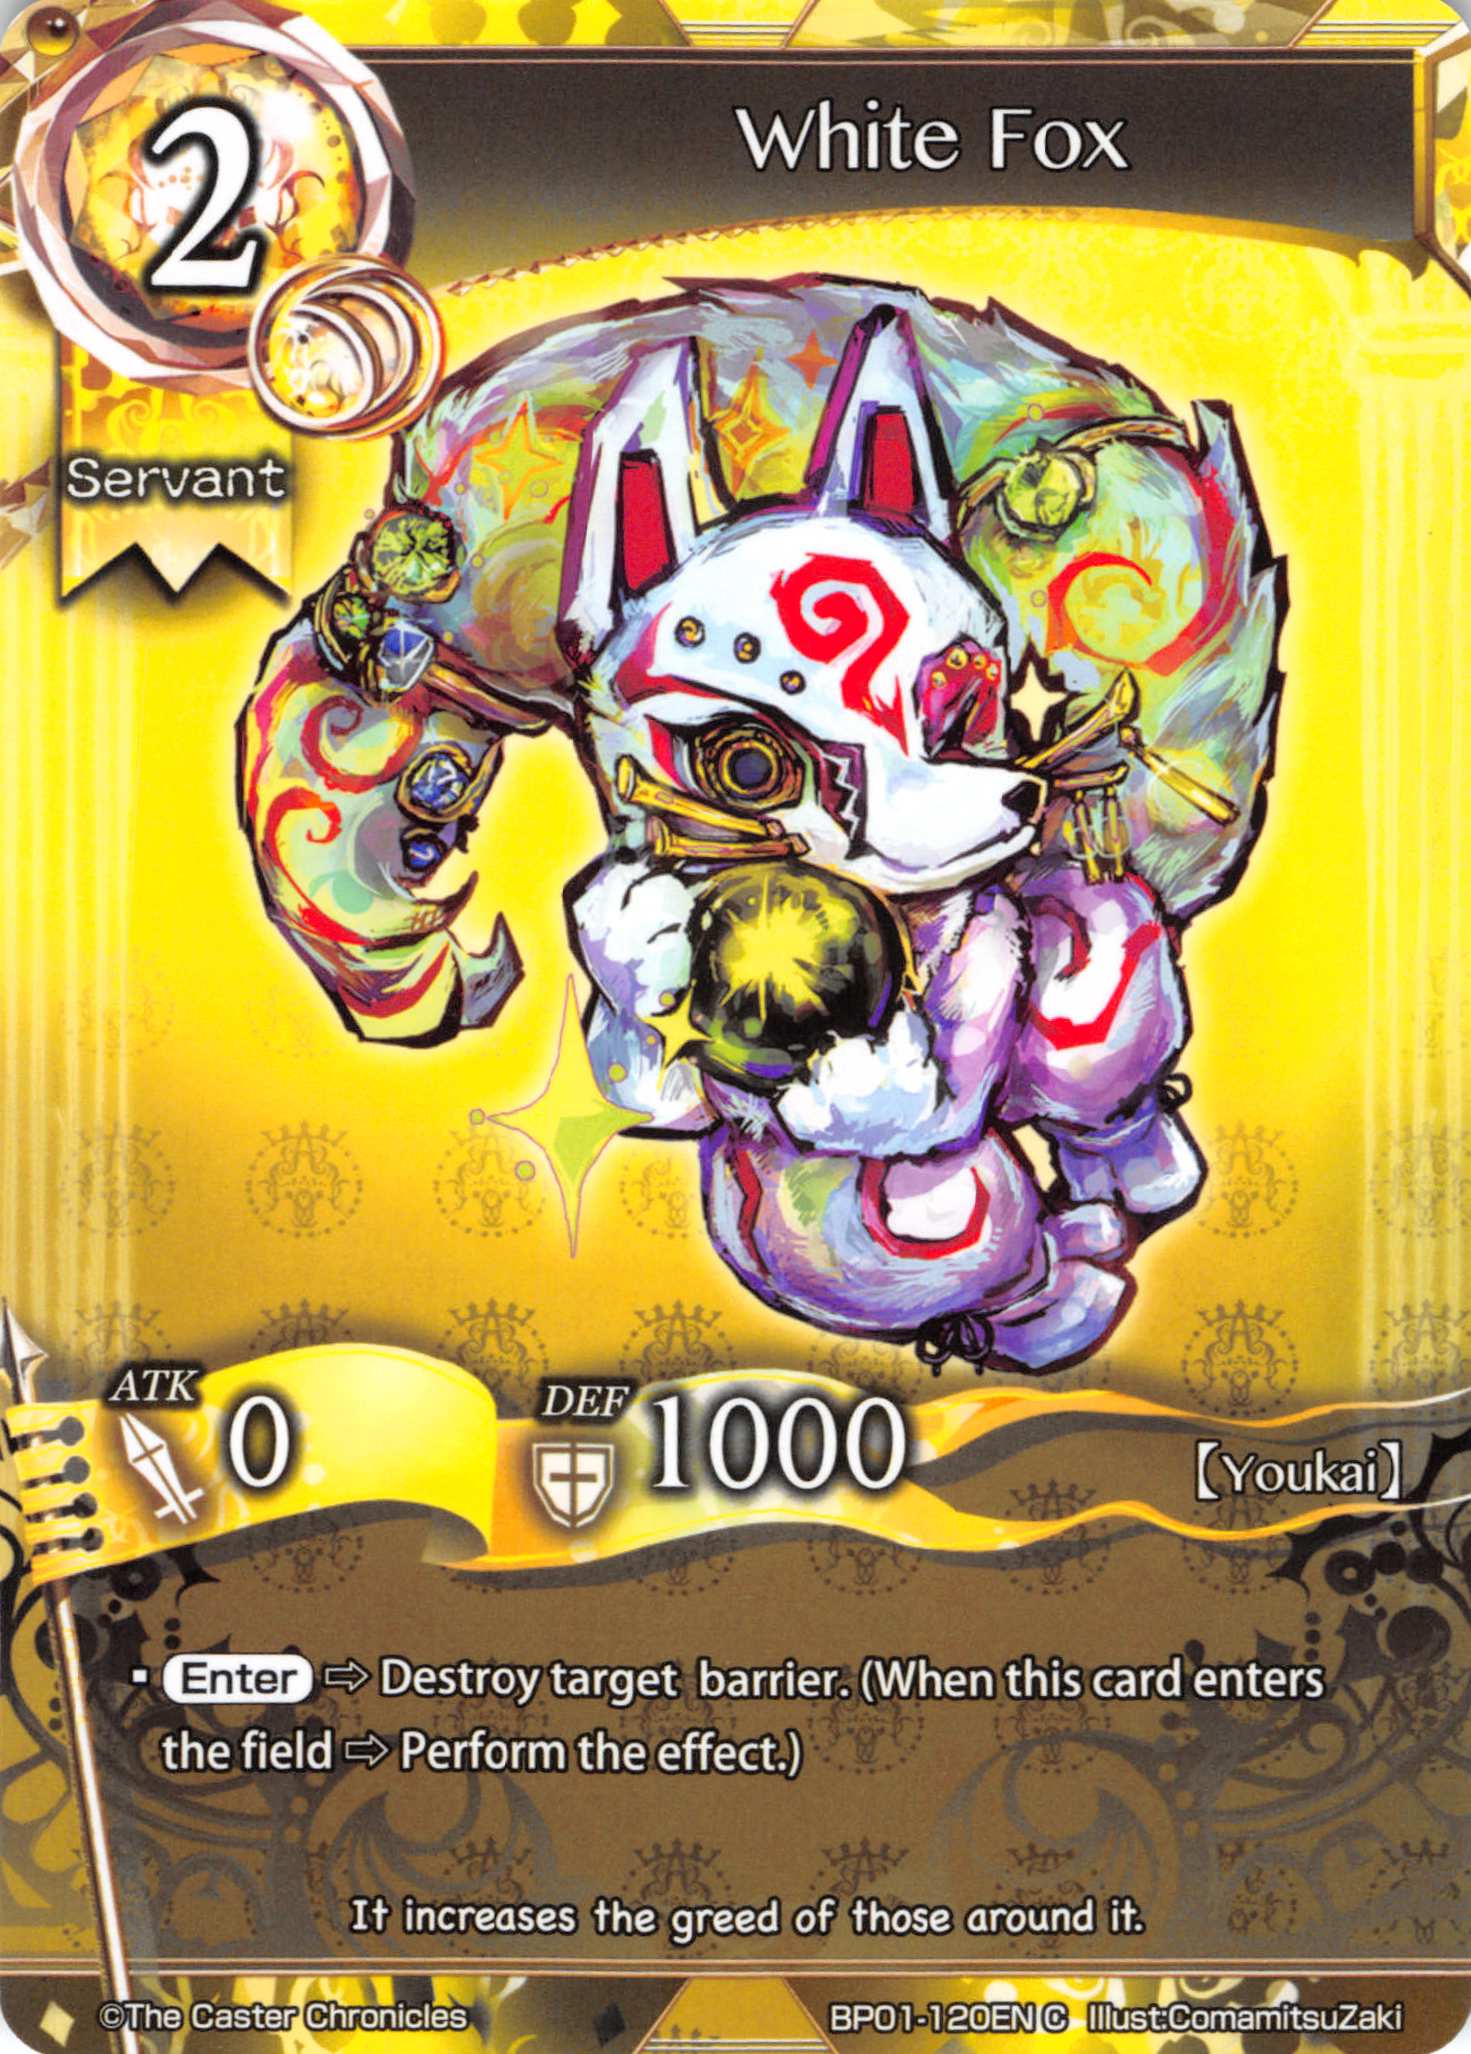 White Fox - BP01-120EN - Duel Kingdom